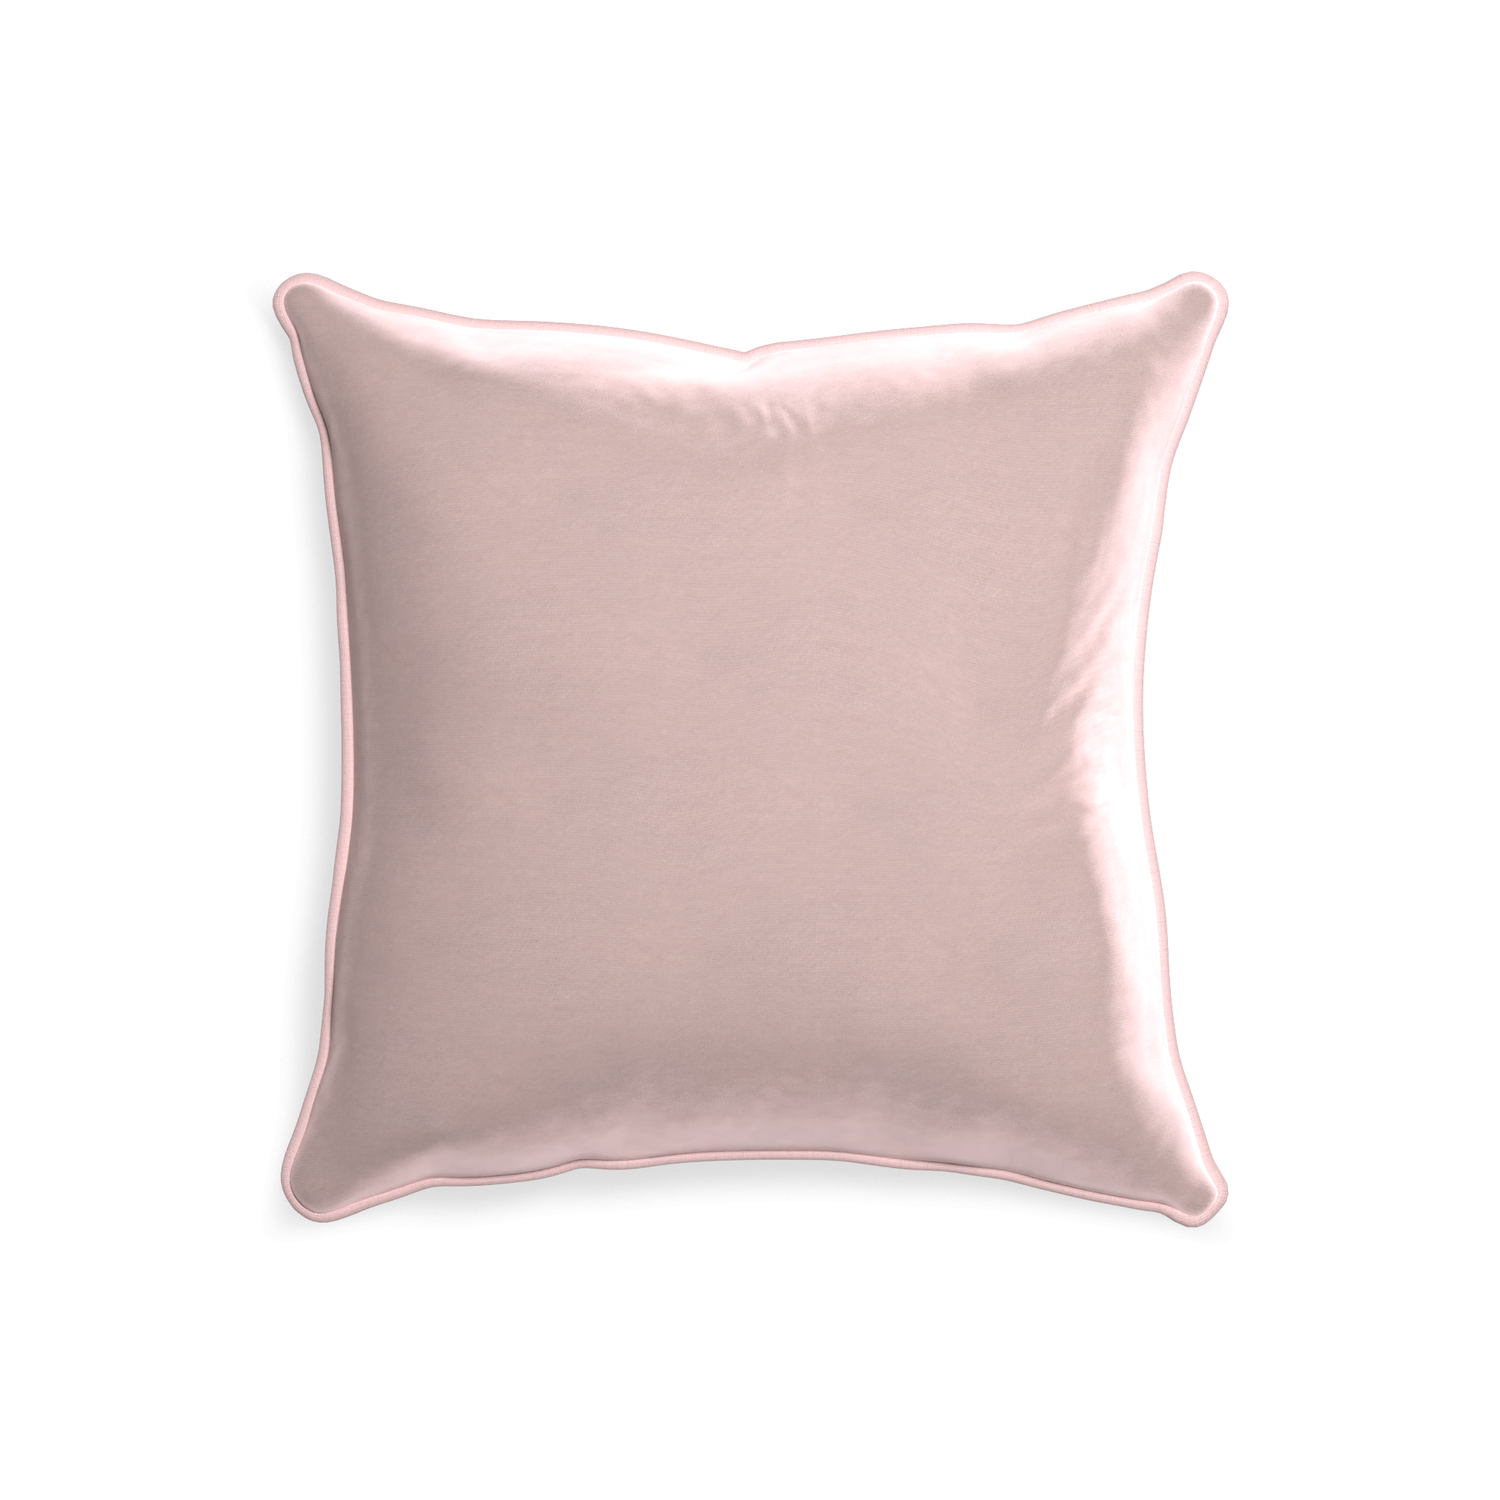 20-square rose velvet custom pillow with petal piping on white background